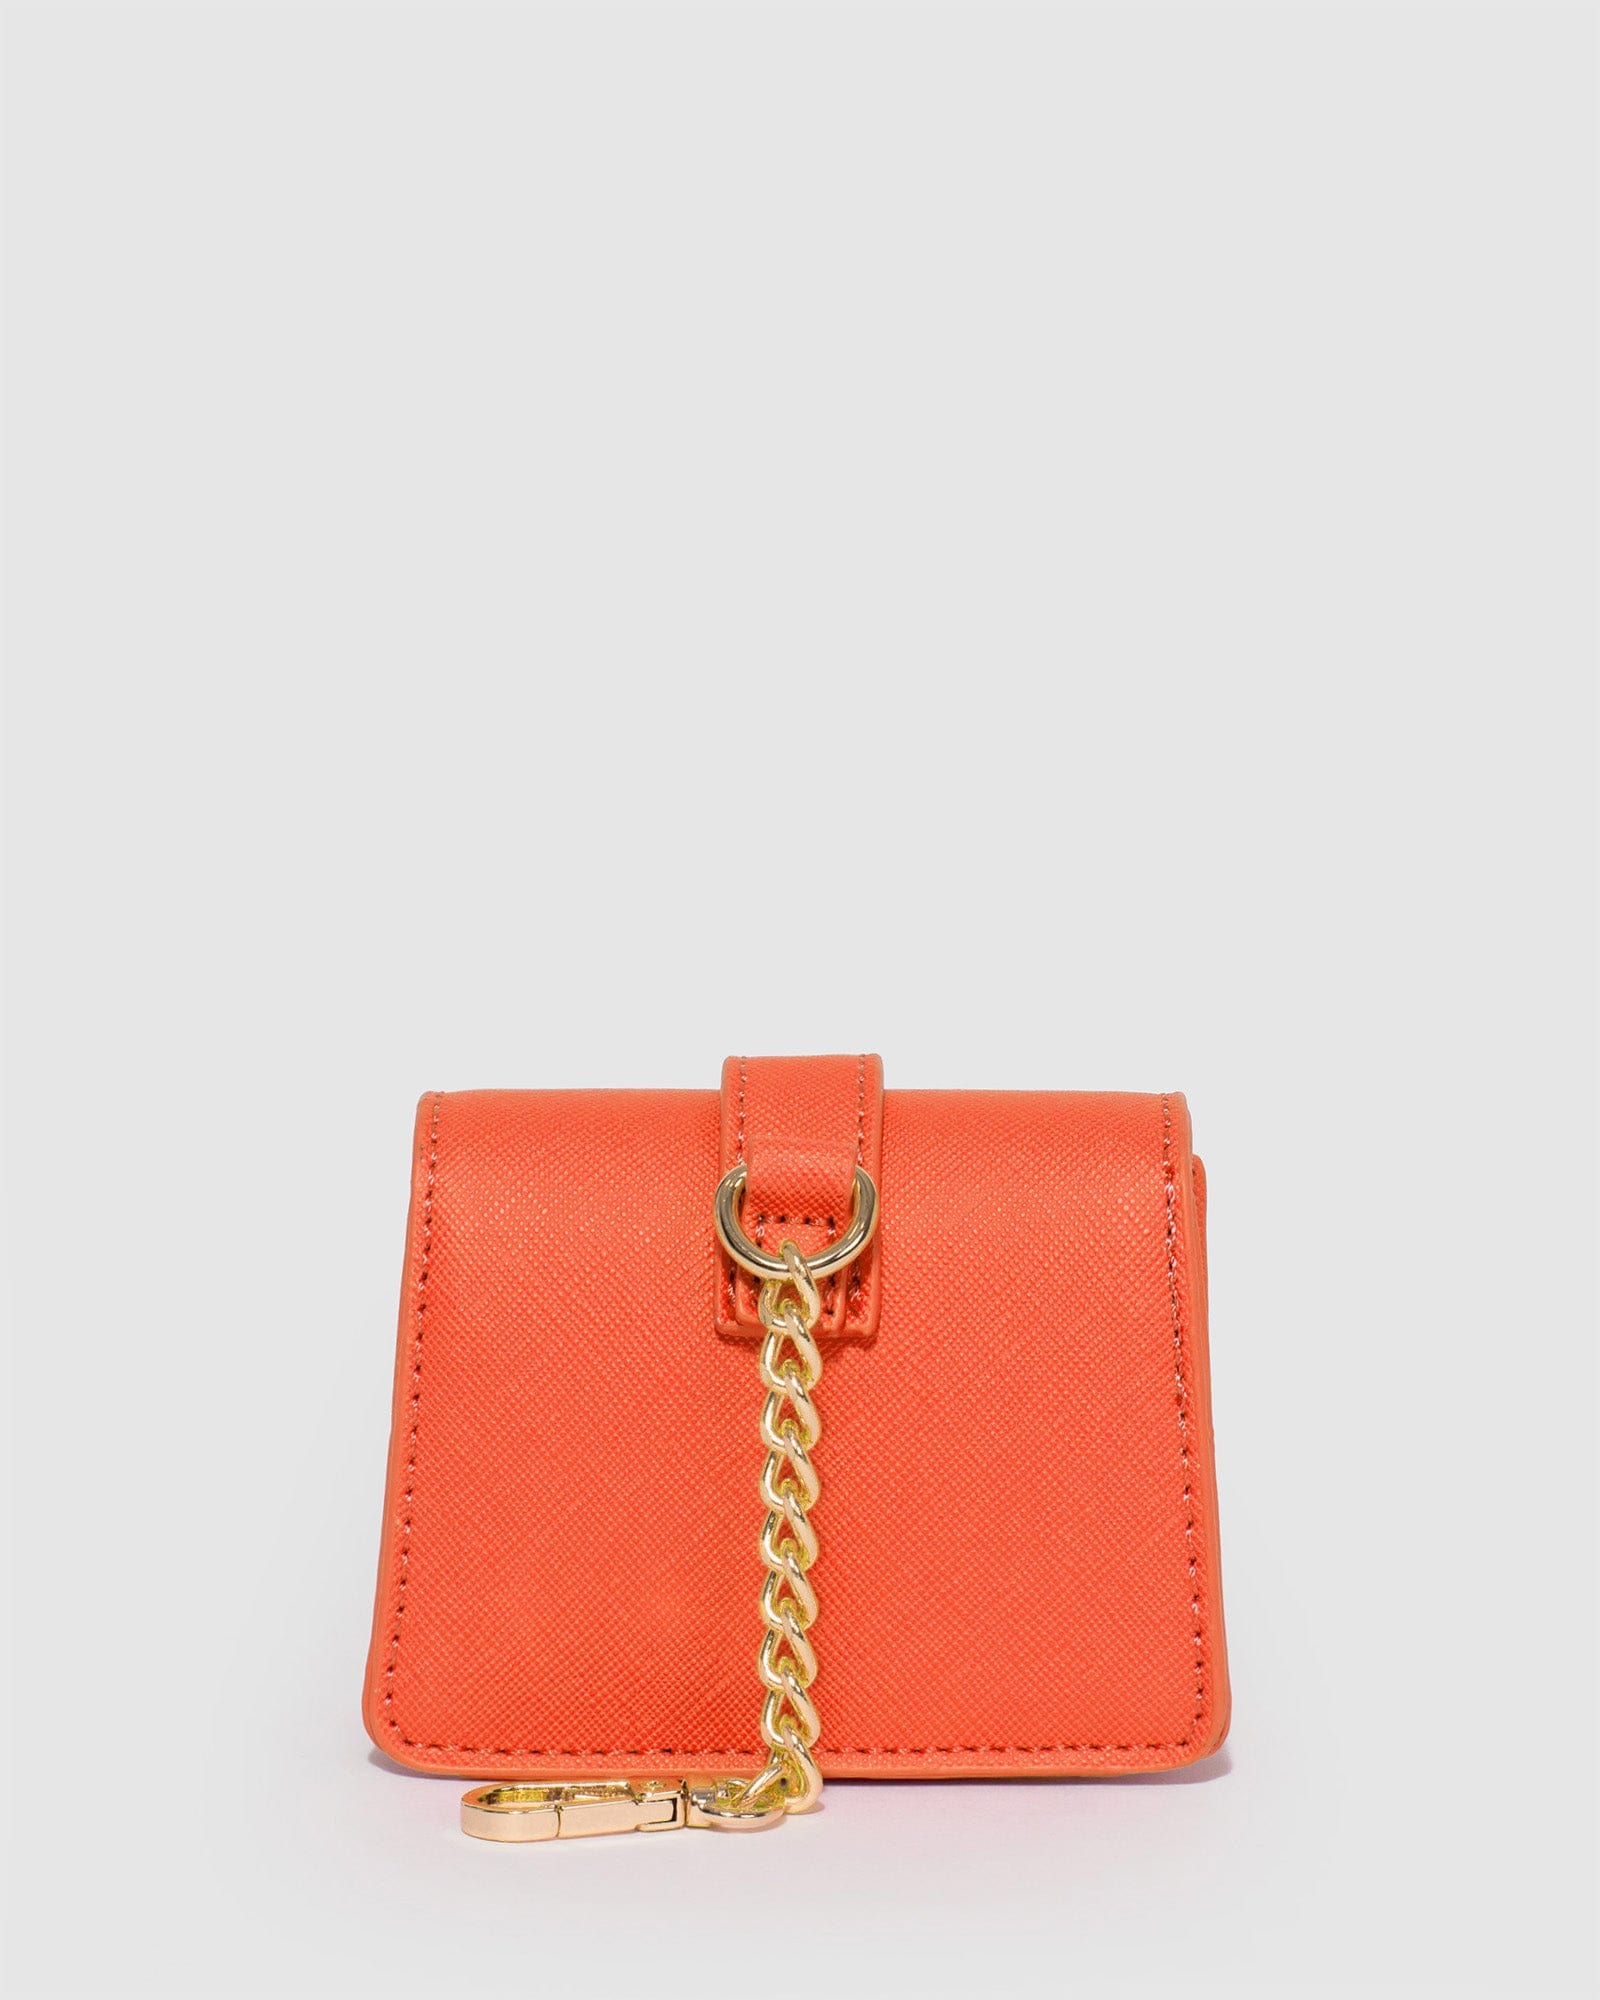 Neon Micro Mini Structured Handle Grab Bag | Bags, Orange bag, Fashion bags